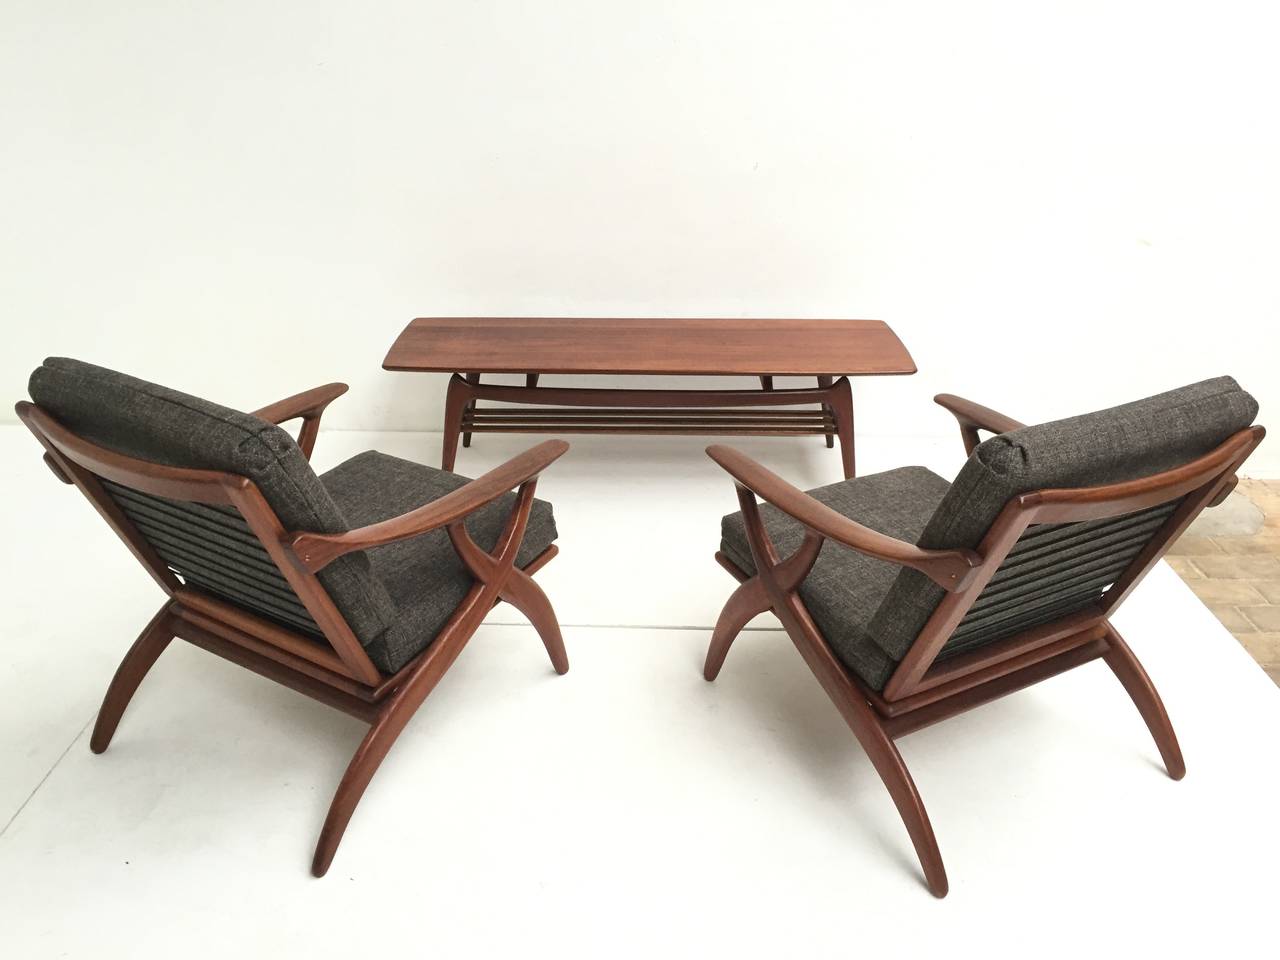 Carved Pair of Biomorphic Teak Easy Chairs by De Ster, Gelderland, 1950s